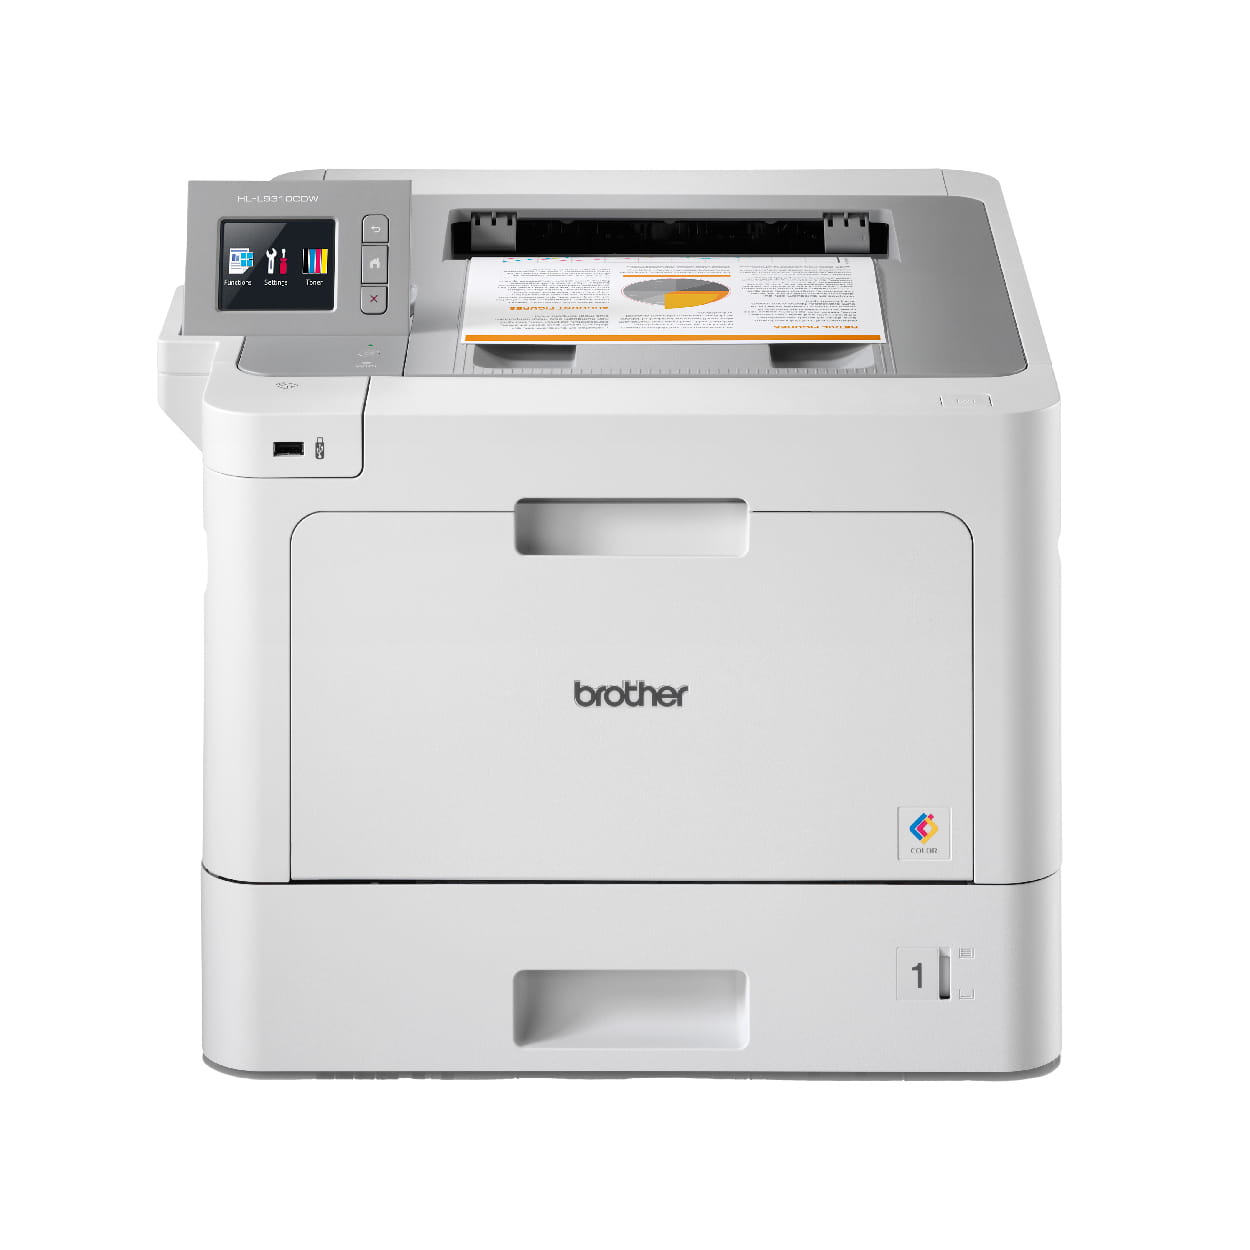 Printers & Multi-Function Printers